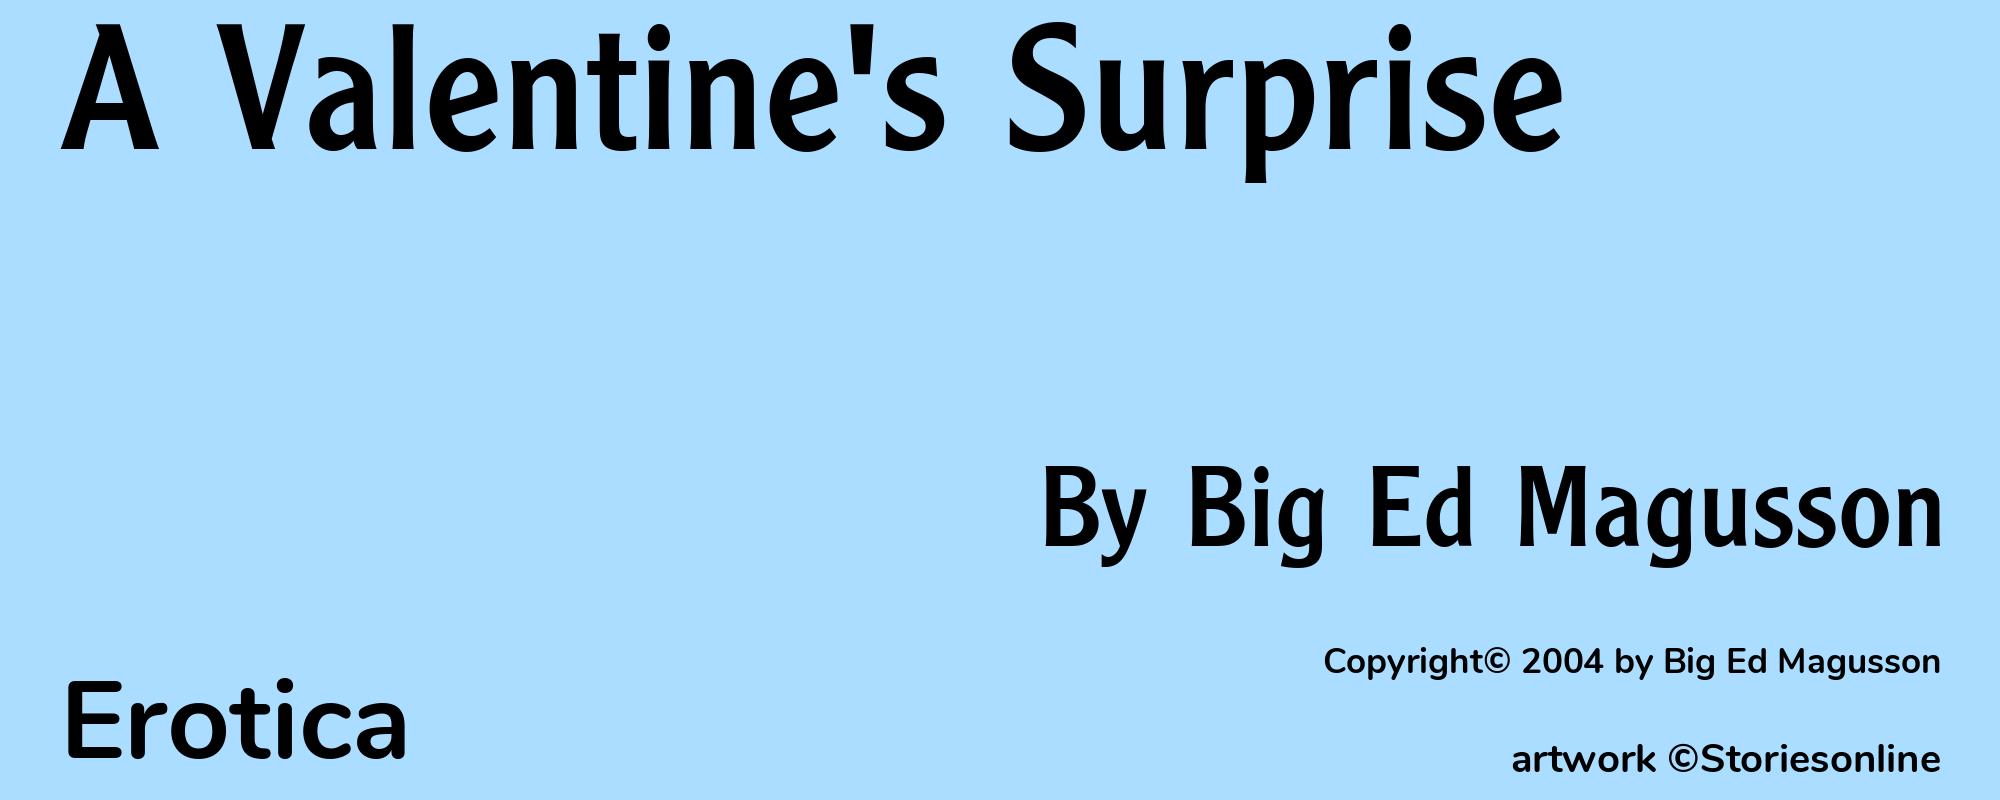 A Valentine's Surprise - Cover